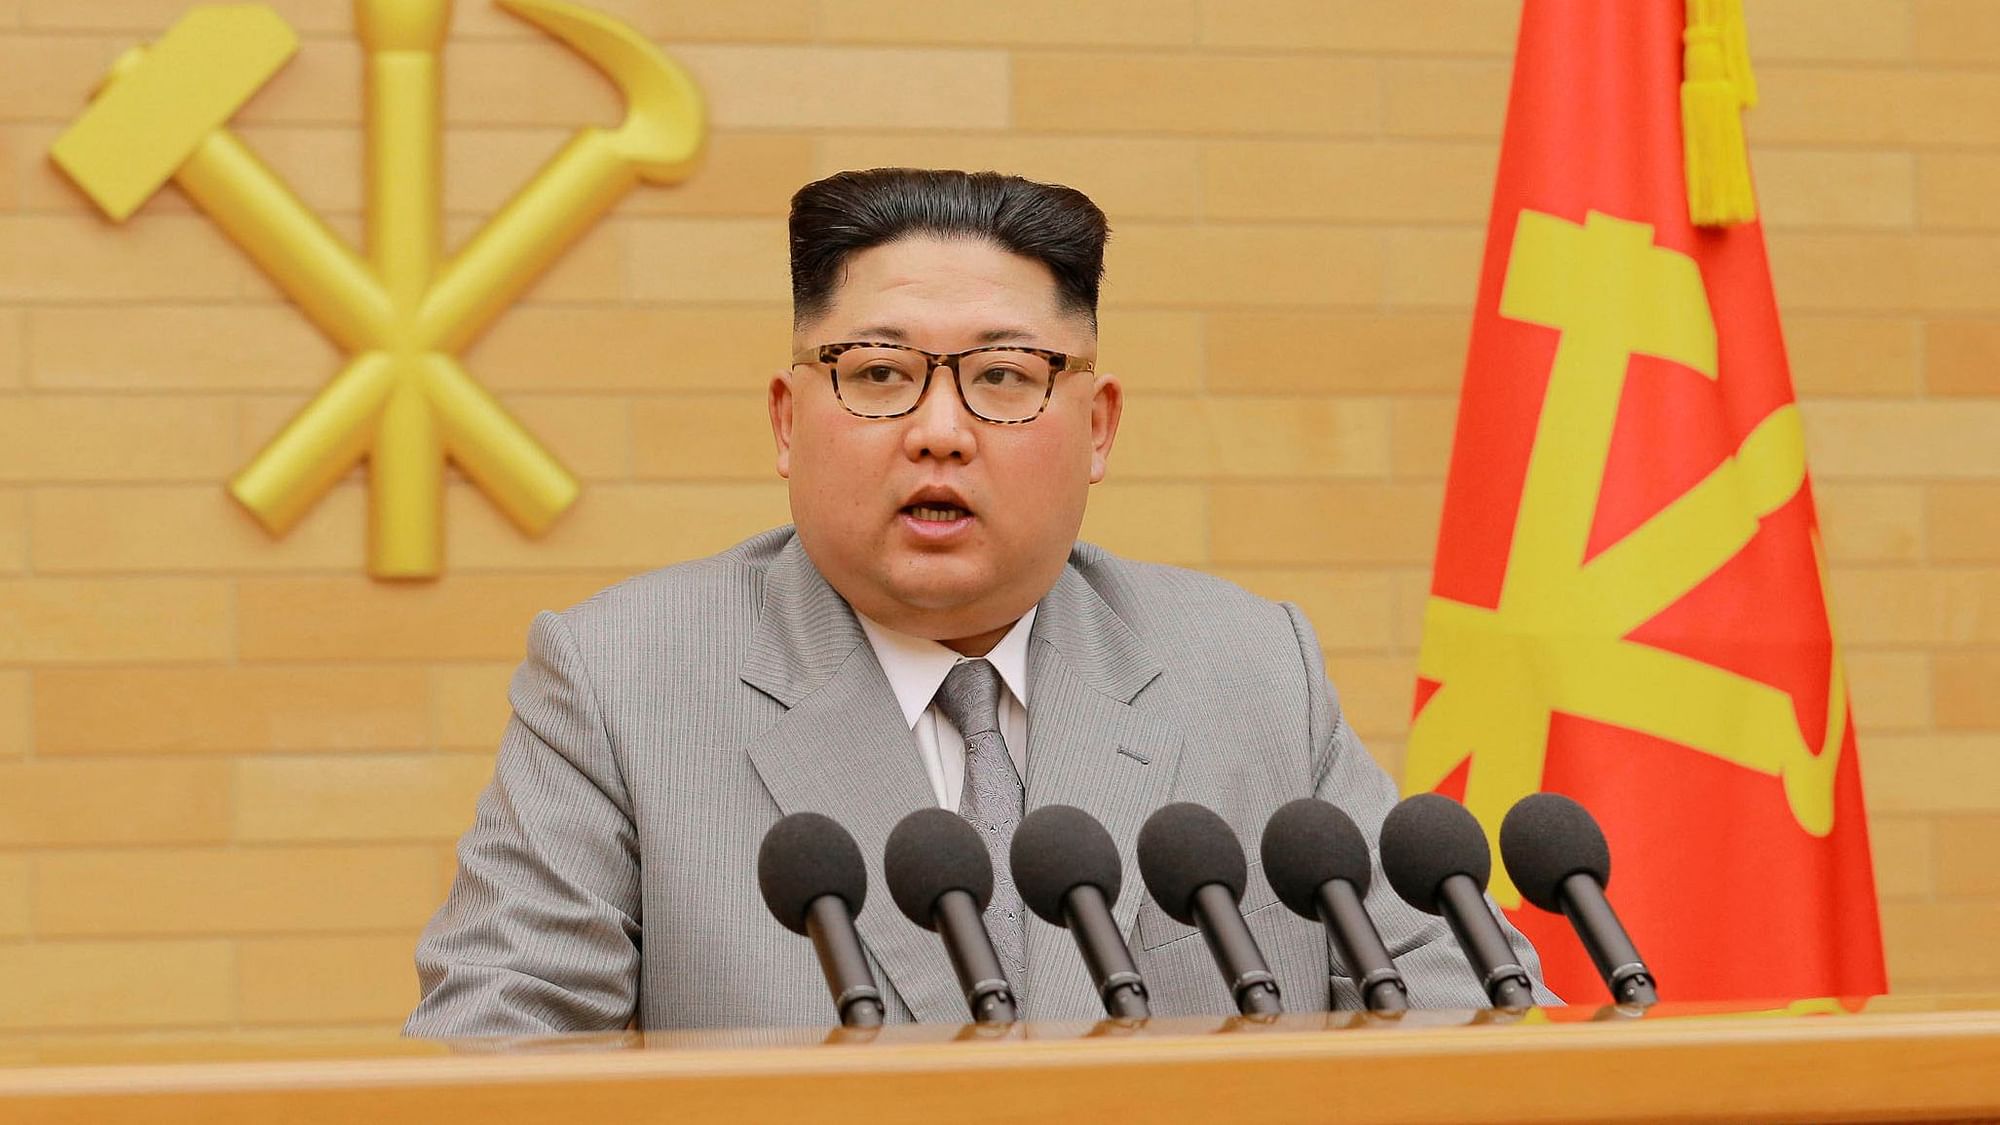 File image of North Korean leader Kim Jong-un.